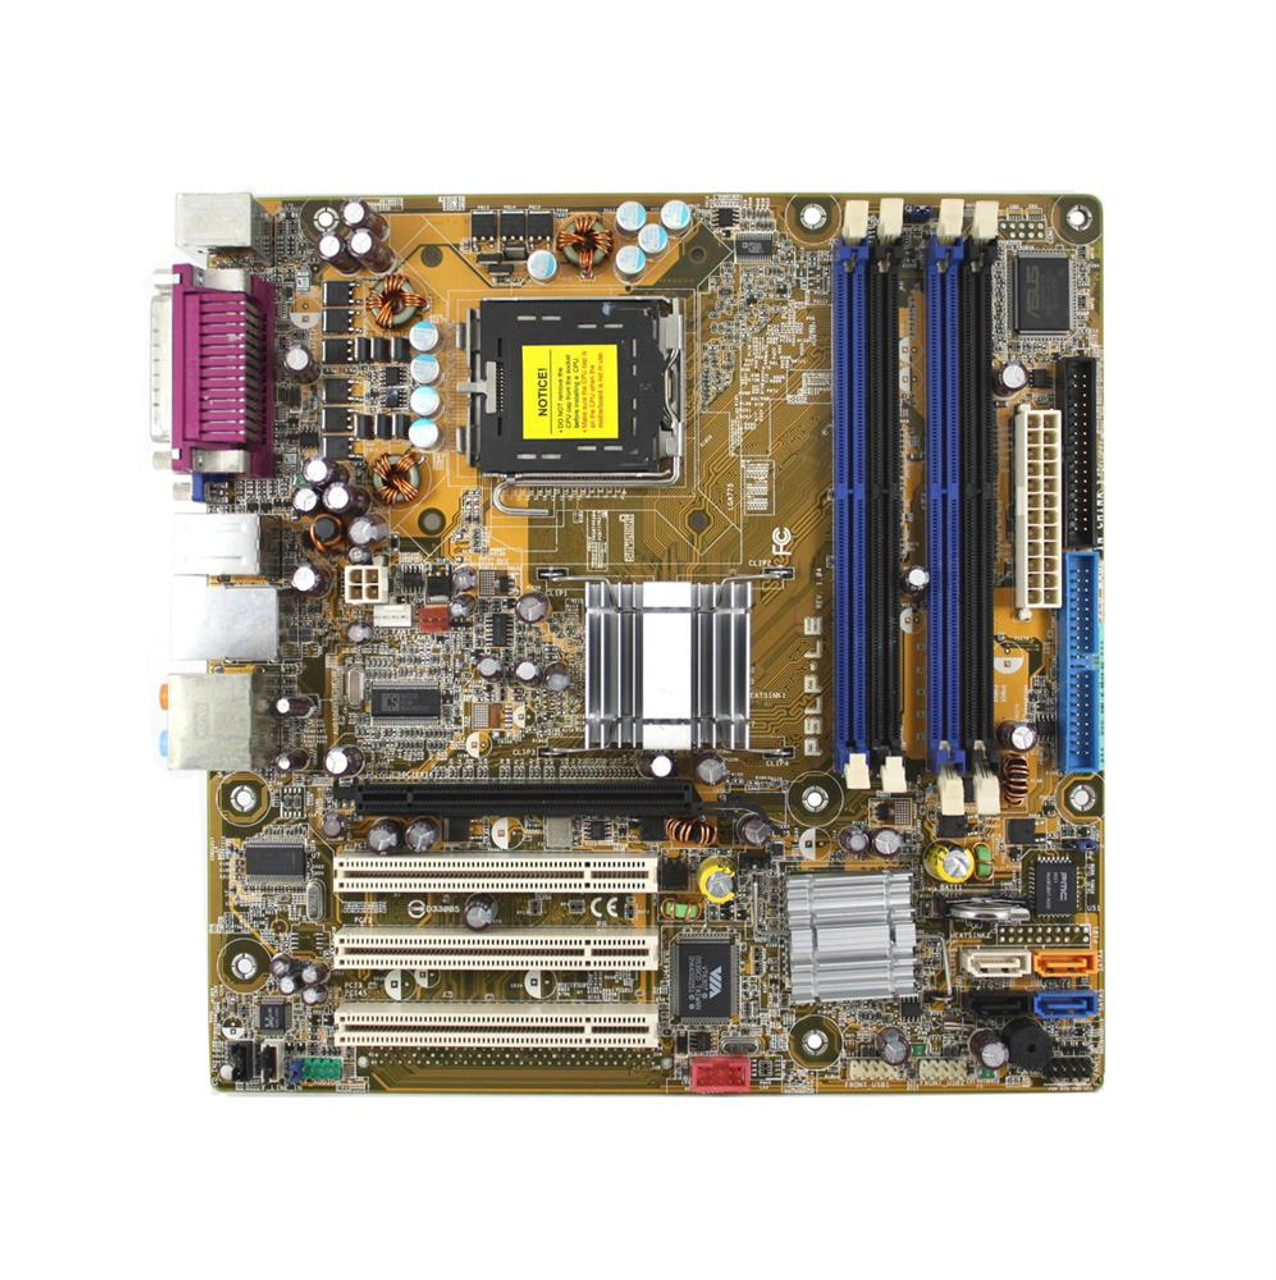 5188-1680 HP System I/O Board (Motherboard) LimeStone GL8E (Refurbished)